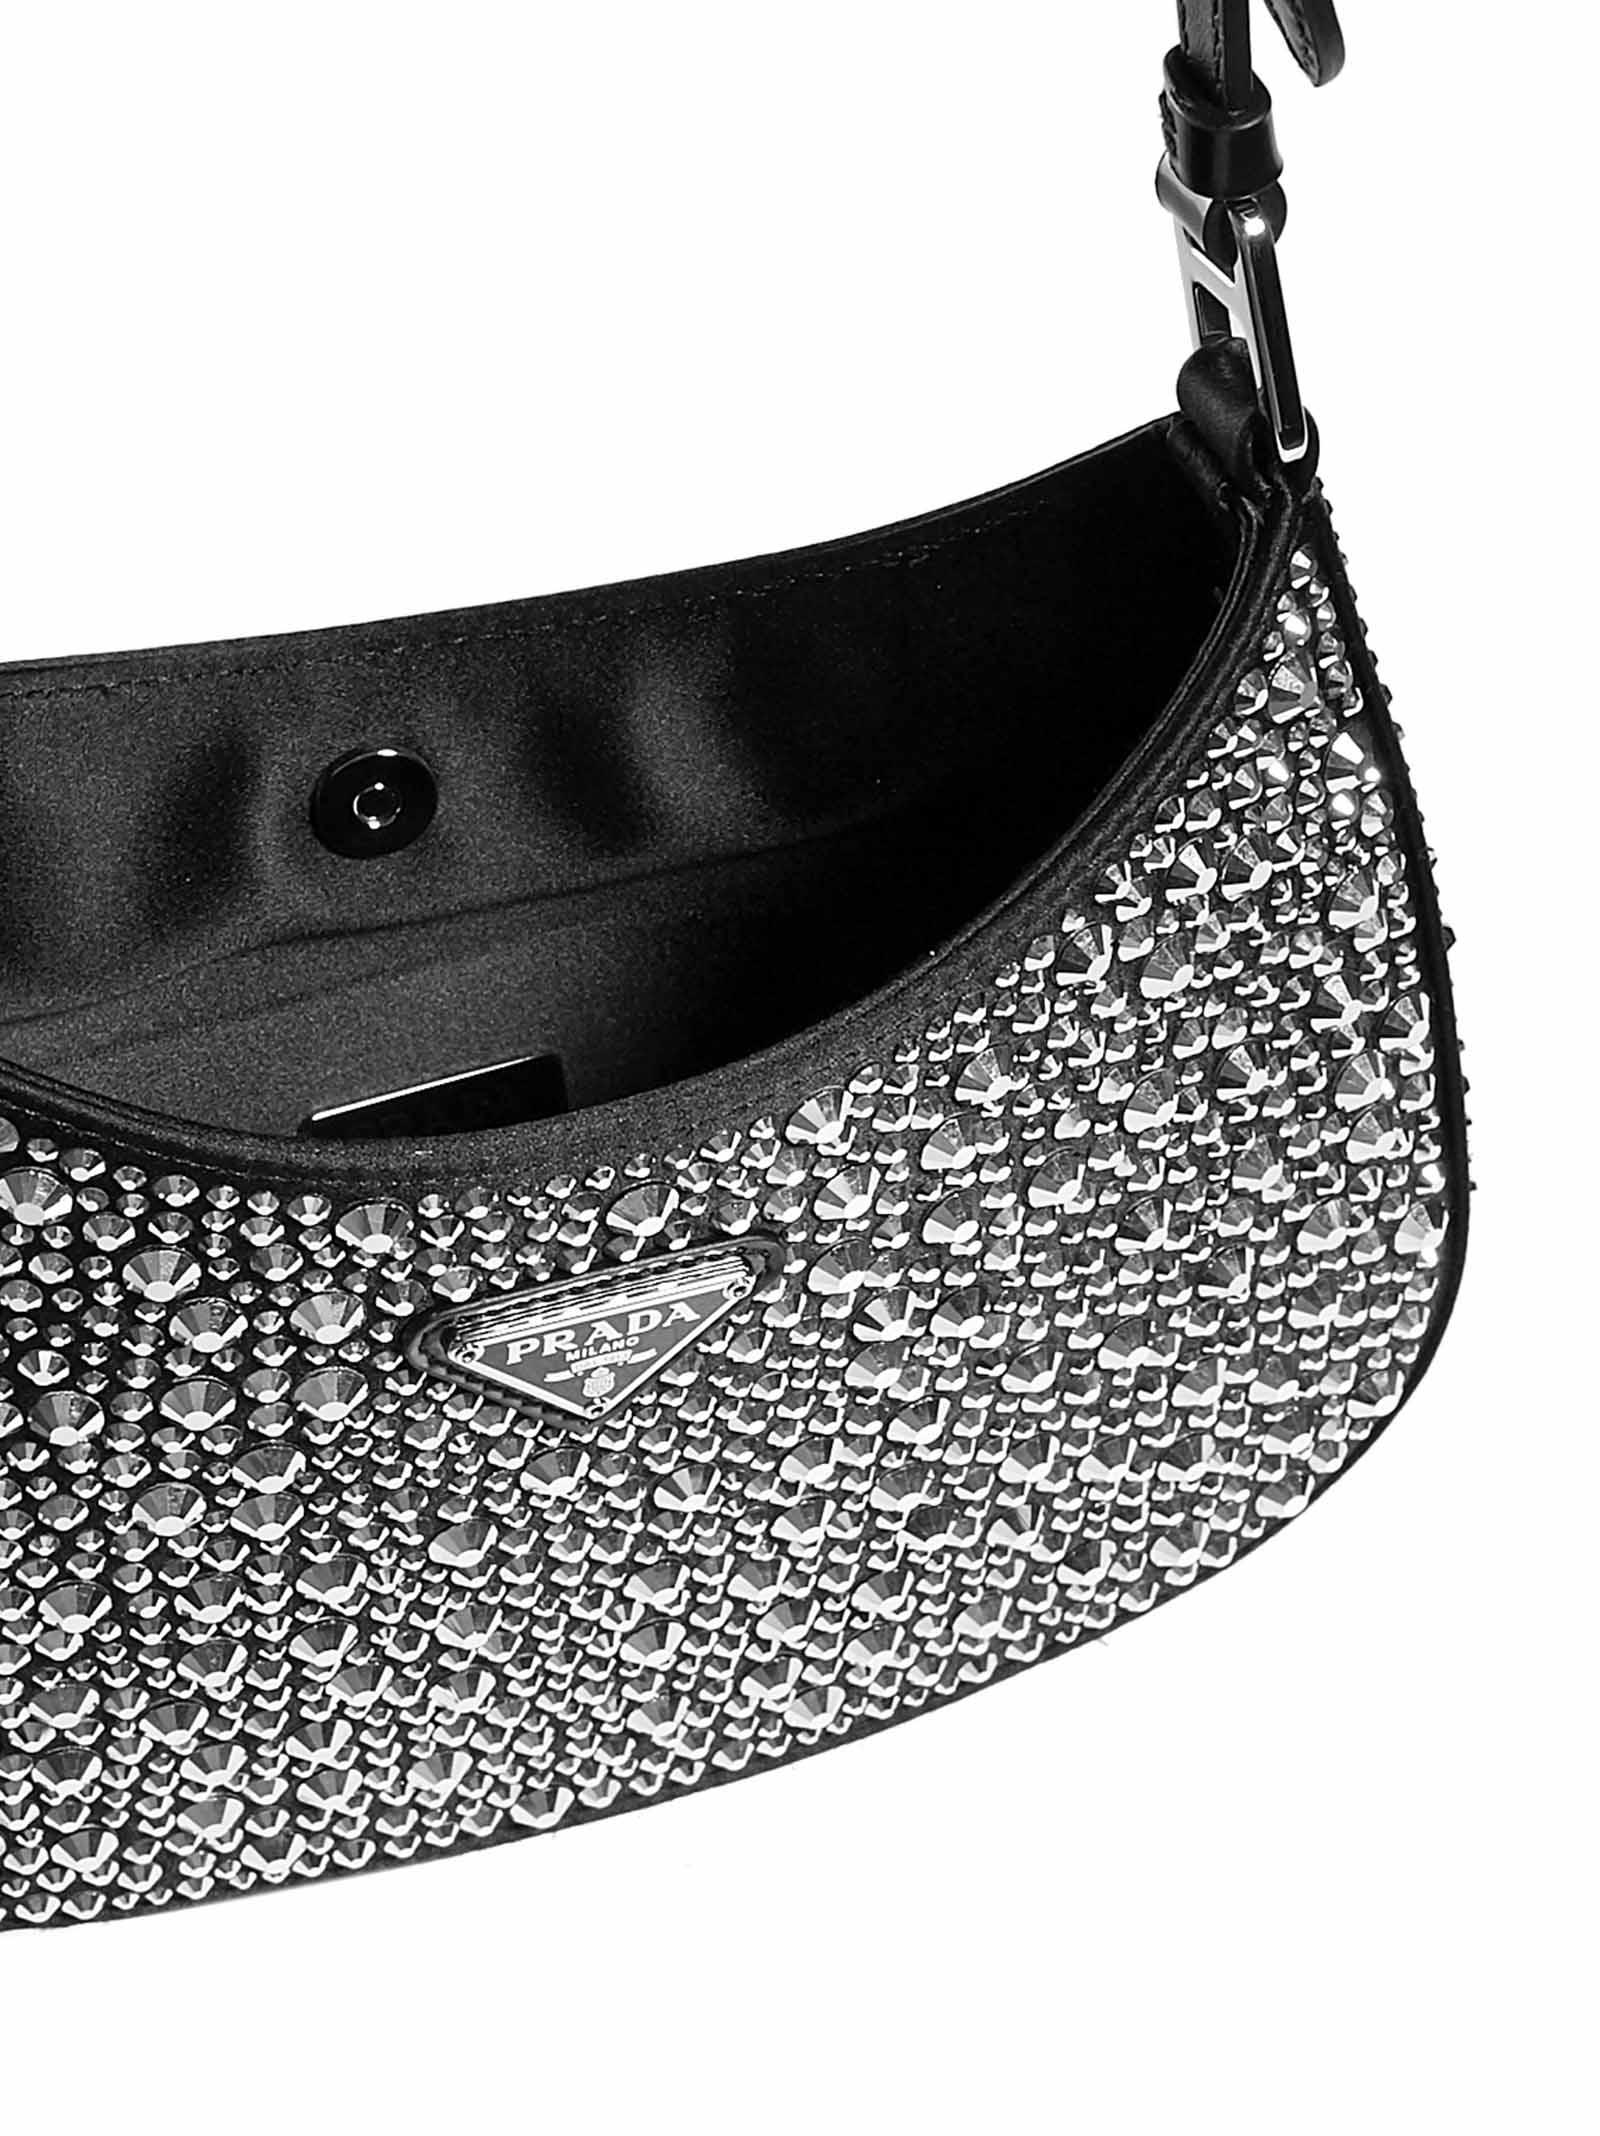 Prada Crystal Cleo Satin Bag Black/Silver Small S 8.7 LIMITED EDITION NEW!